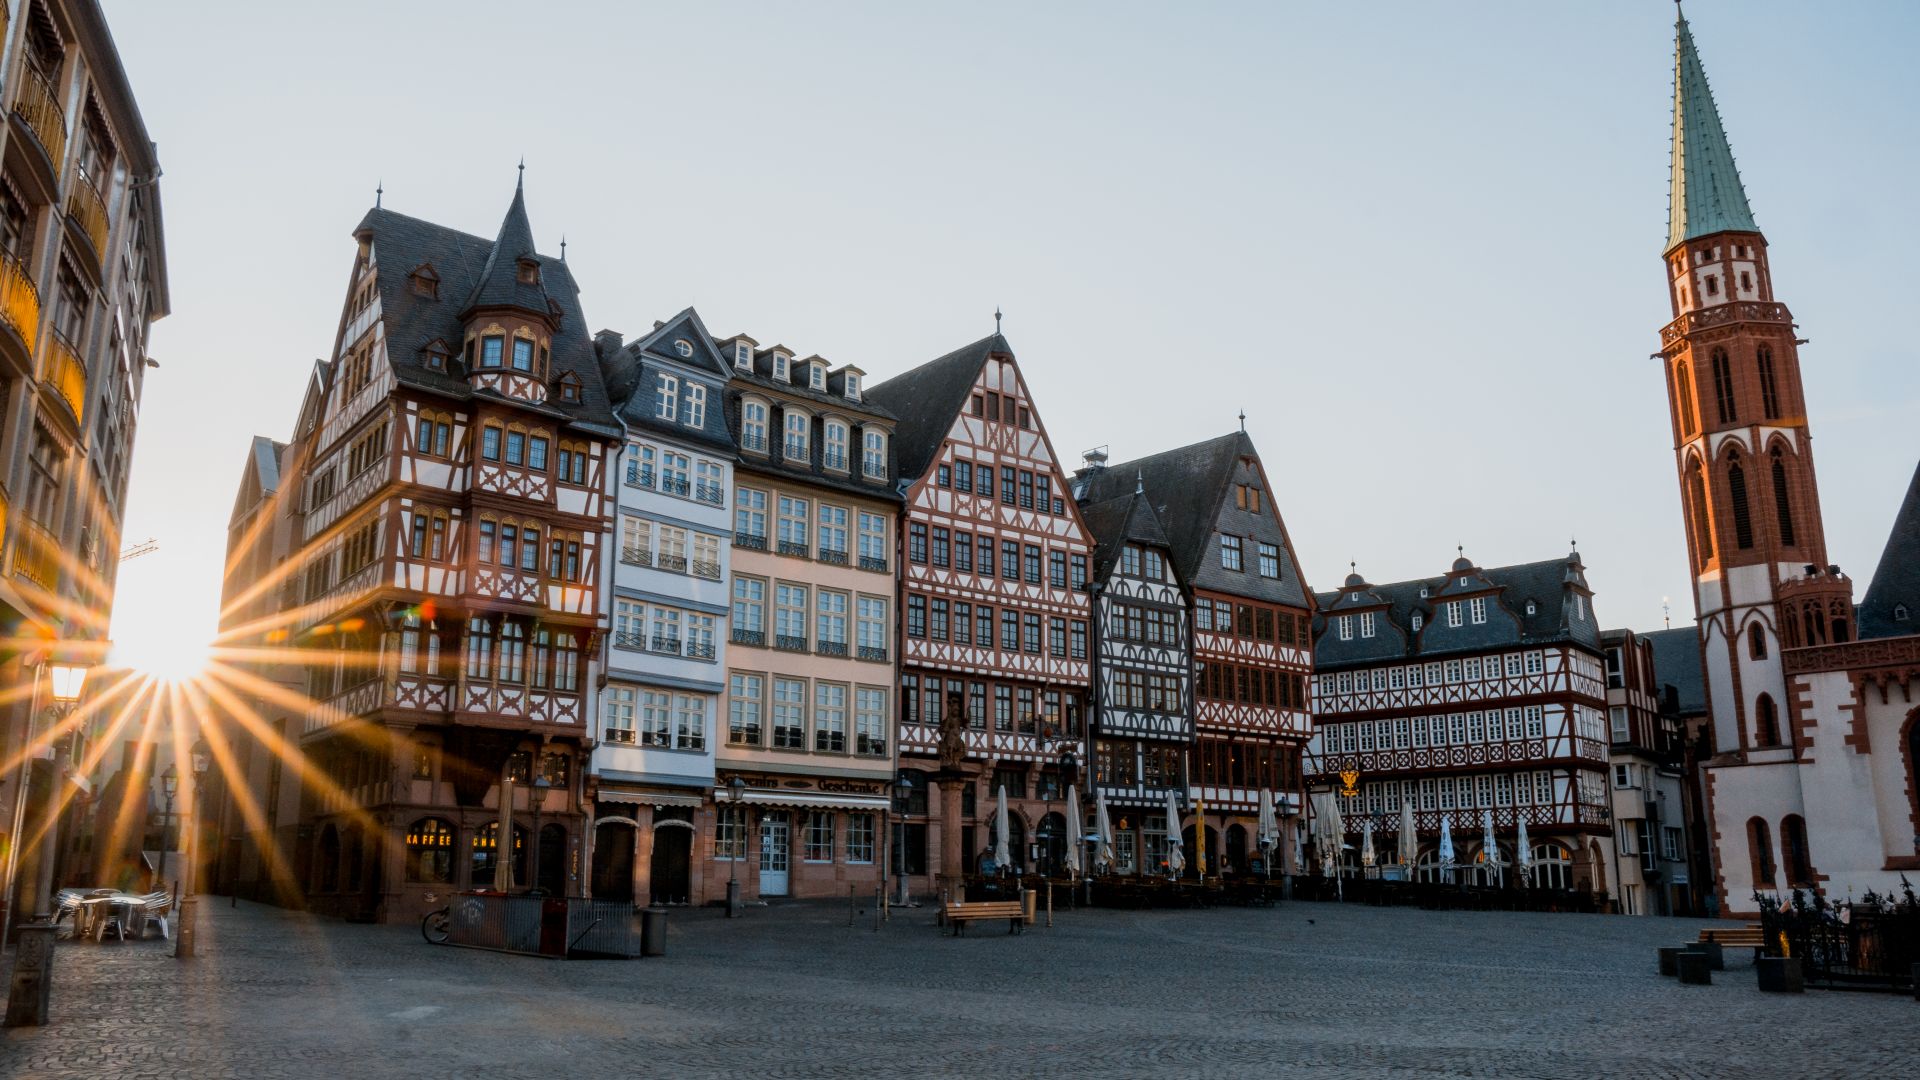 Frankfurt am Main: Half-timbered houses at Römerberg